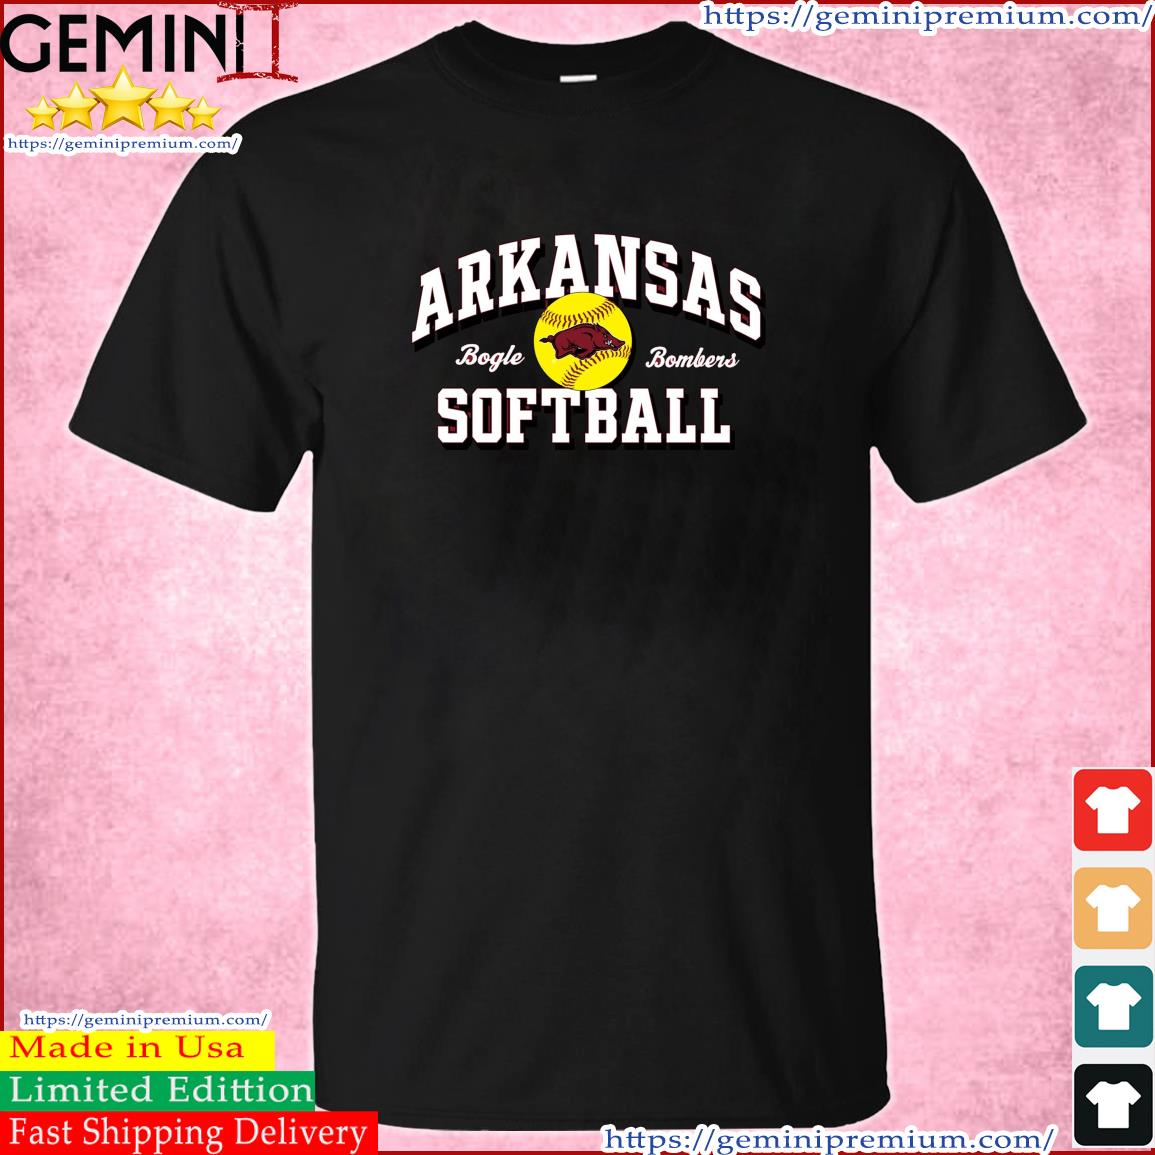 Arkansas Softball Bogle Bombers shirt